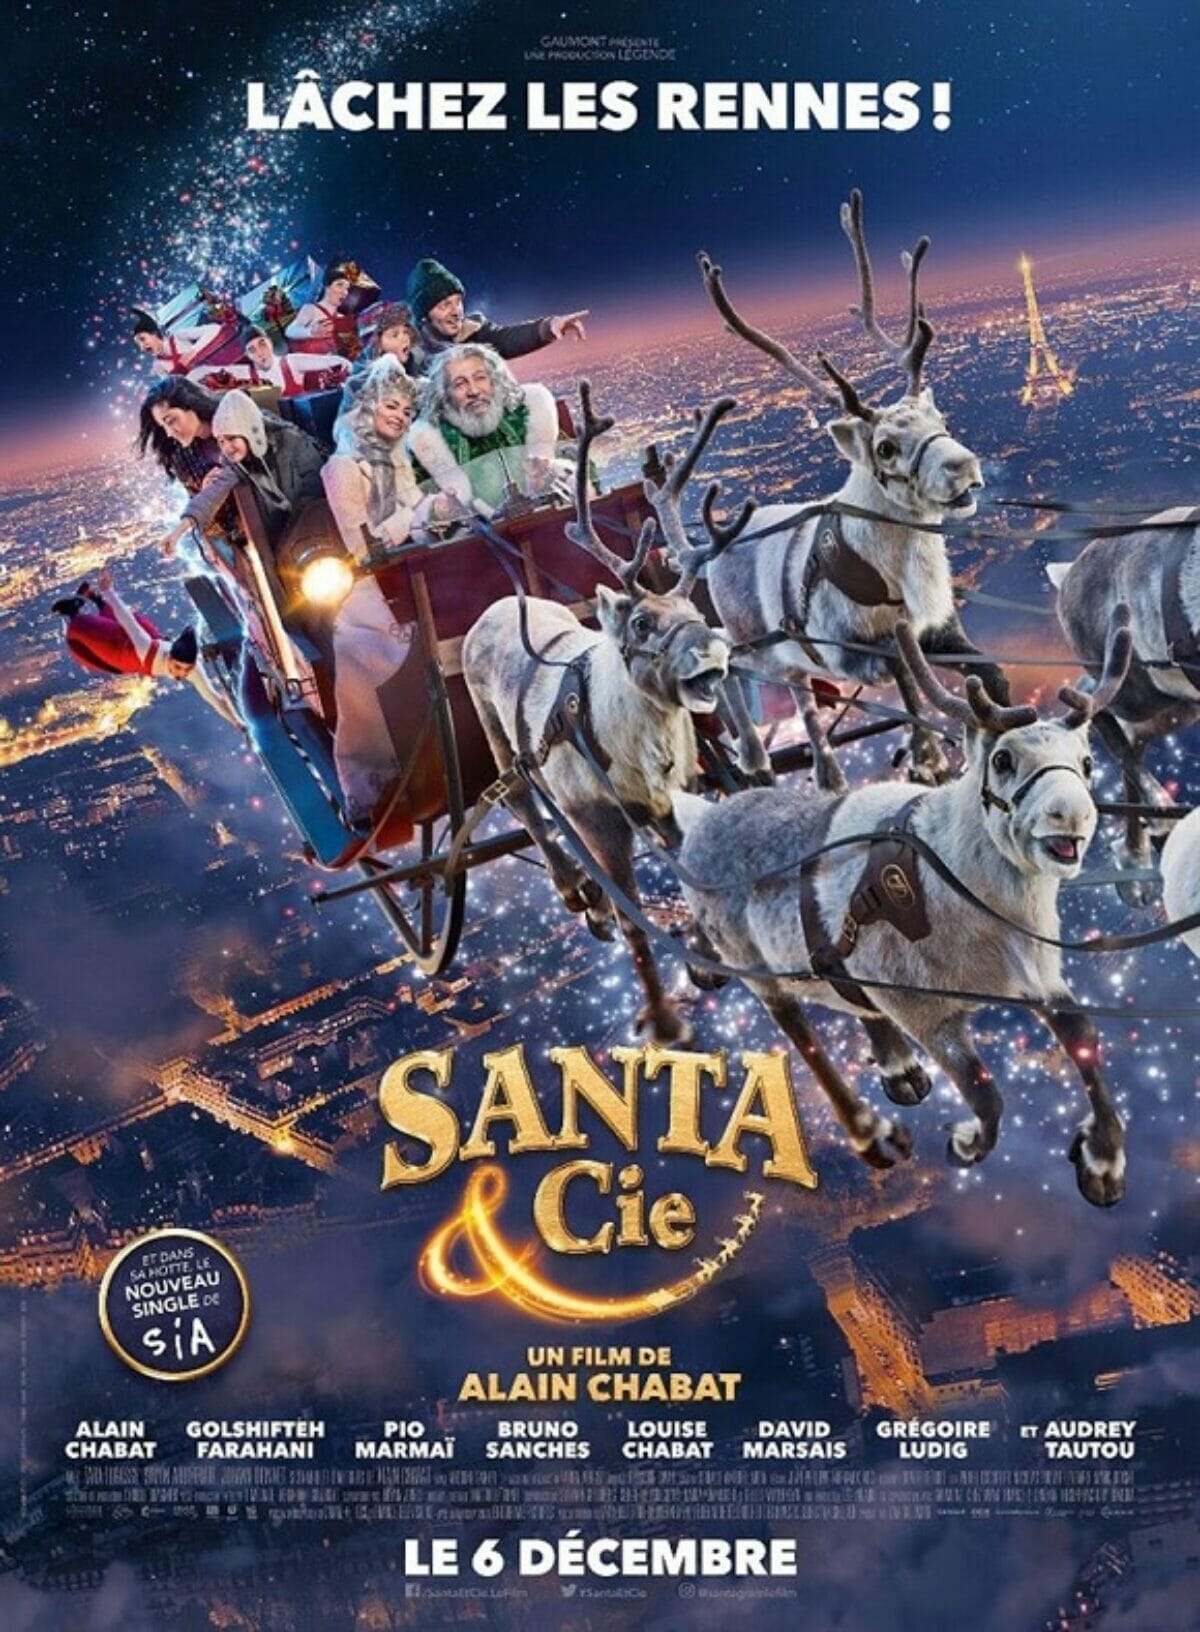 Santa-&-cie-poster